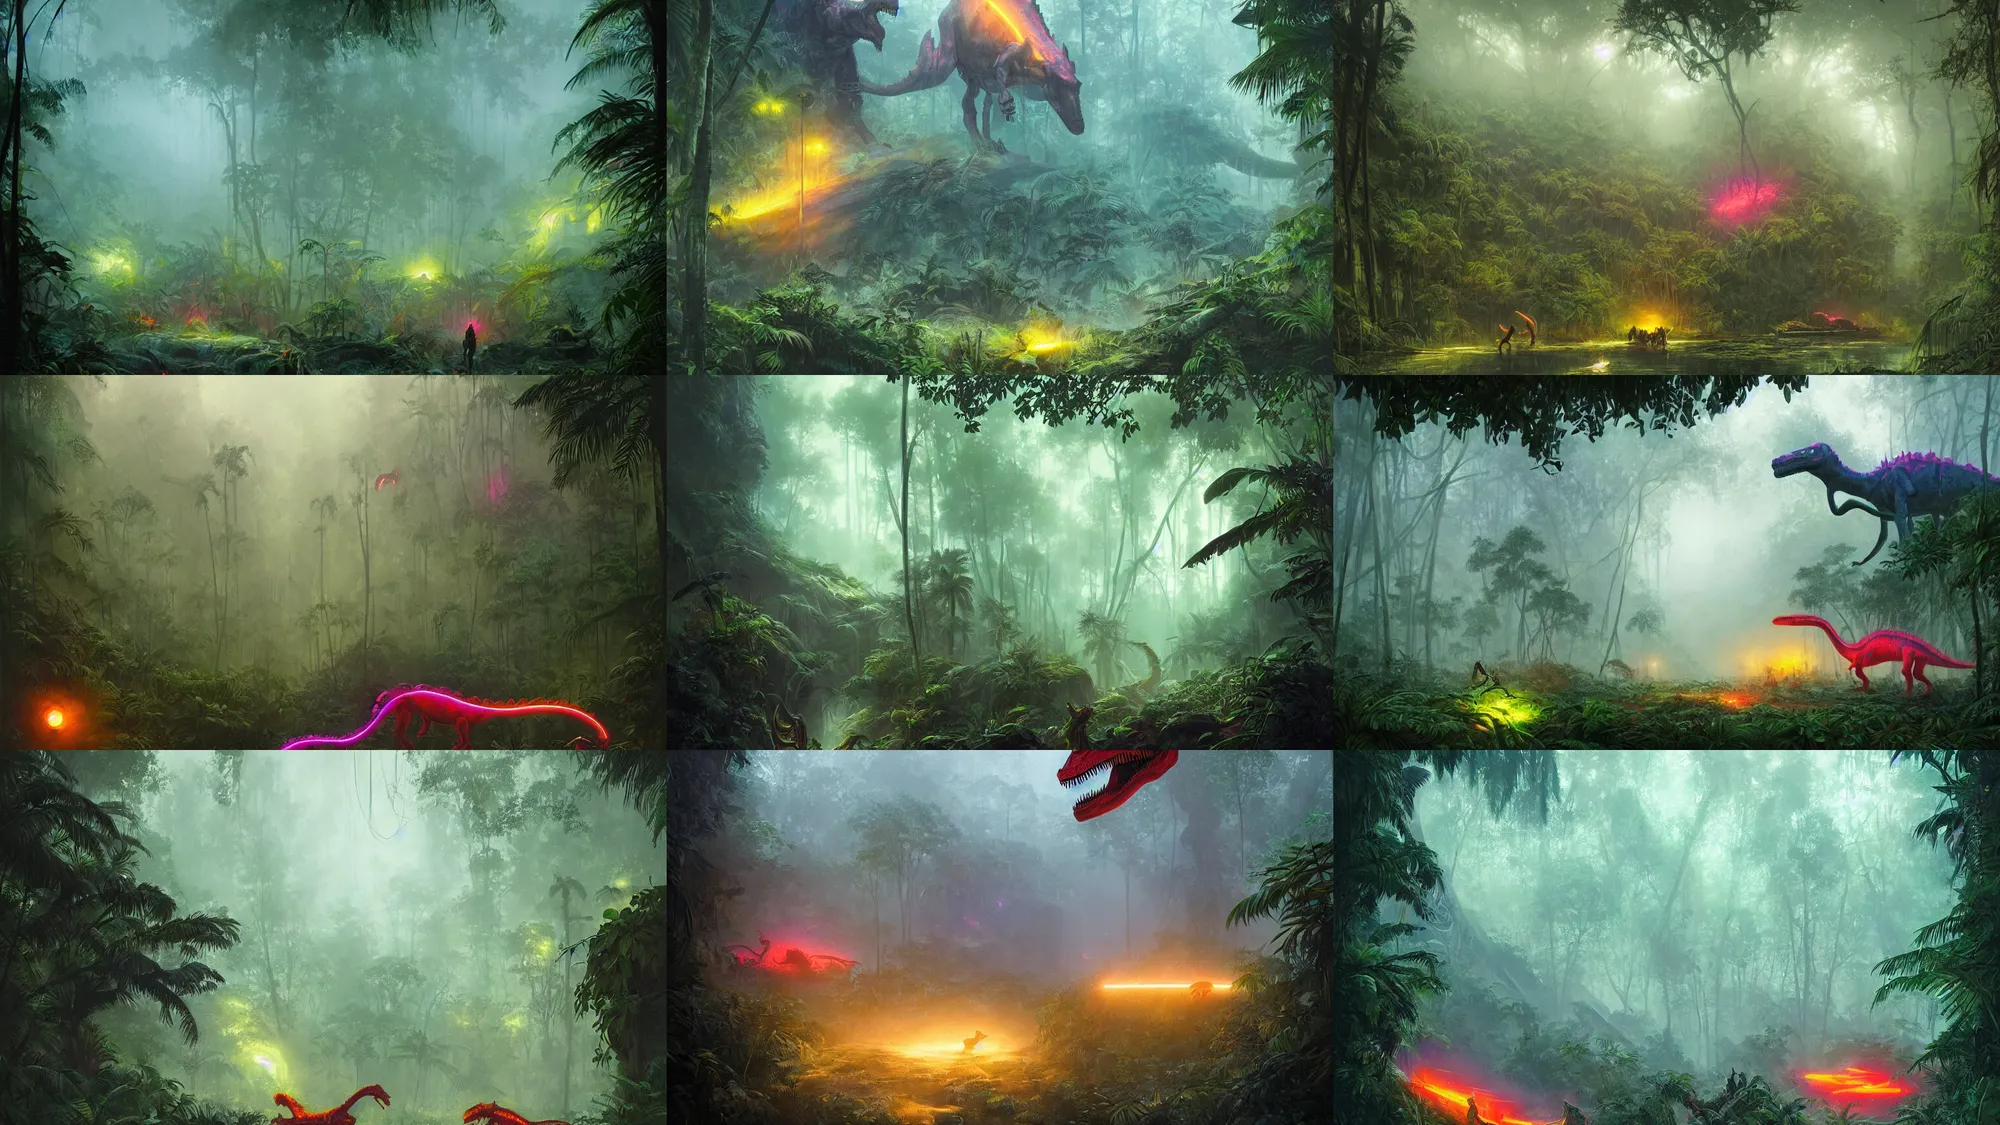 Prompt: neon glowing dinosaur in a foggy jungle by magali villeneuve and greg rutkowski